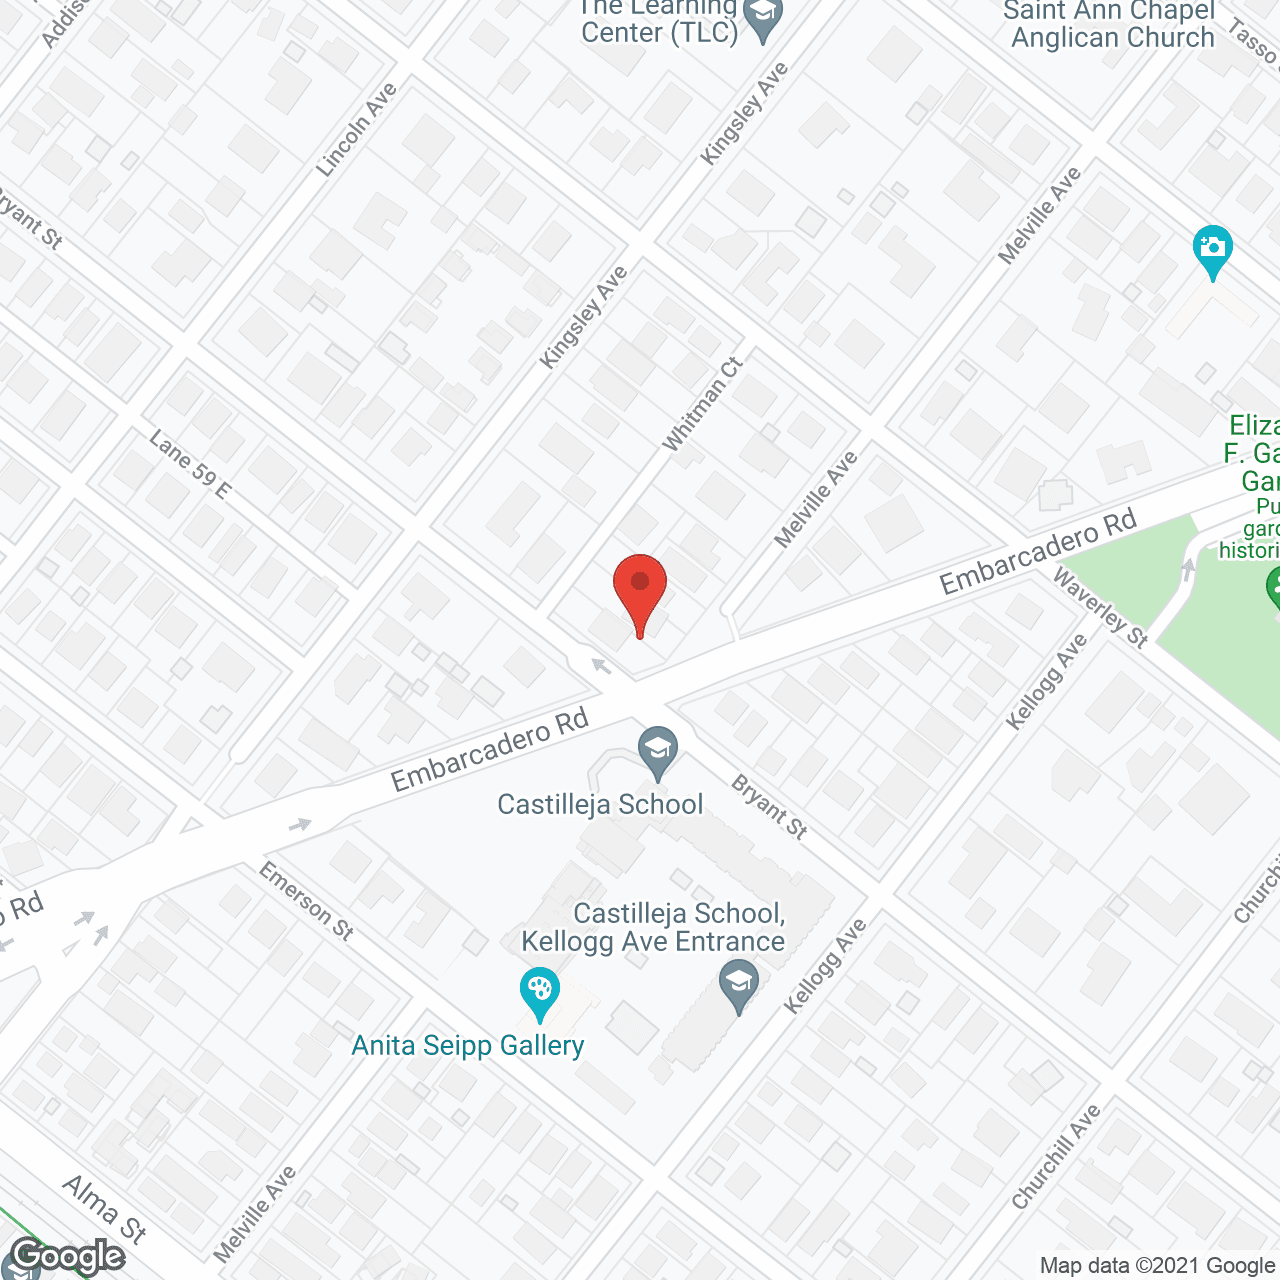 TheKey of Palo Alto, CA in google map